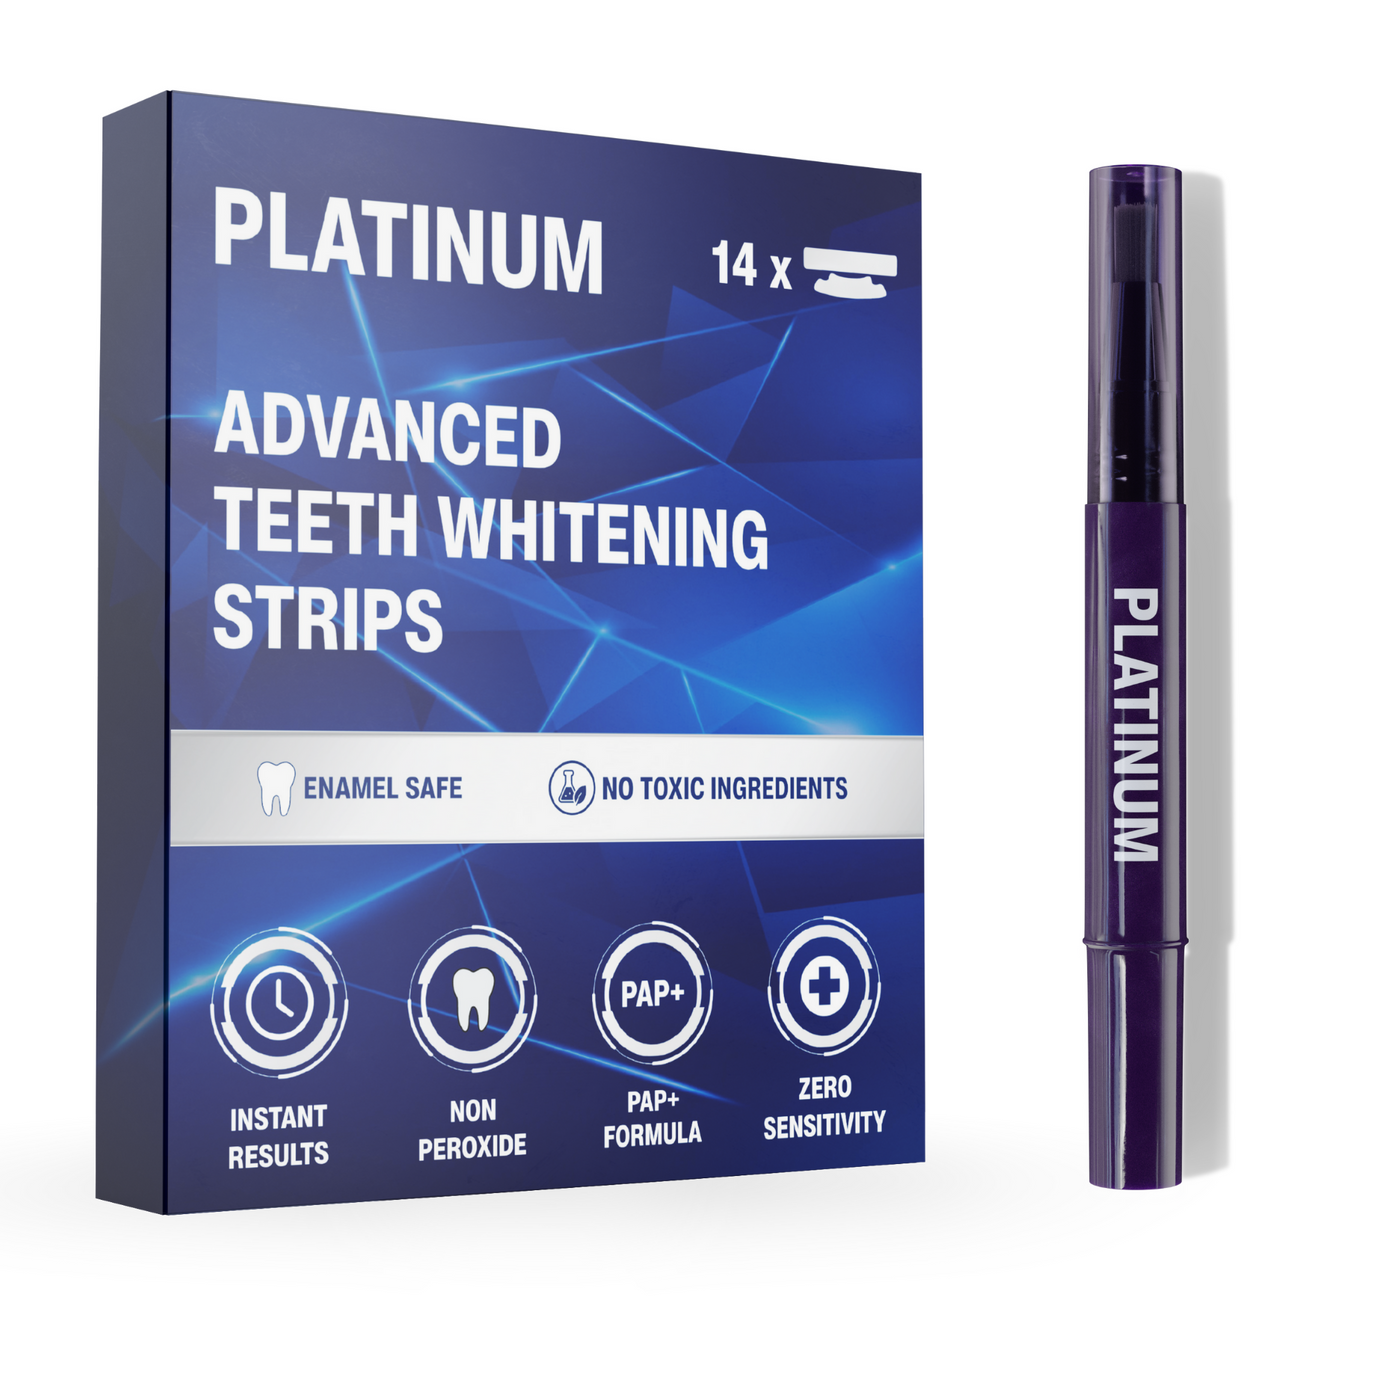 Platinum PAP+ Teeth Whitening Strips Product Image